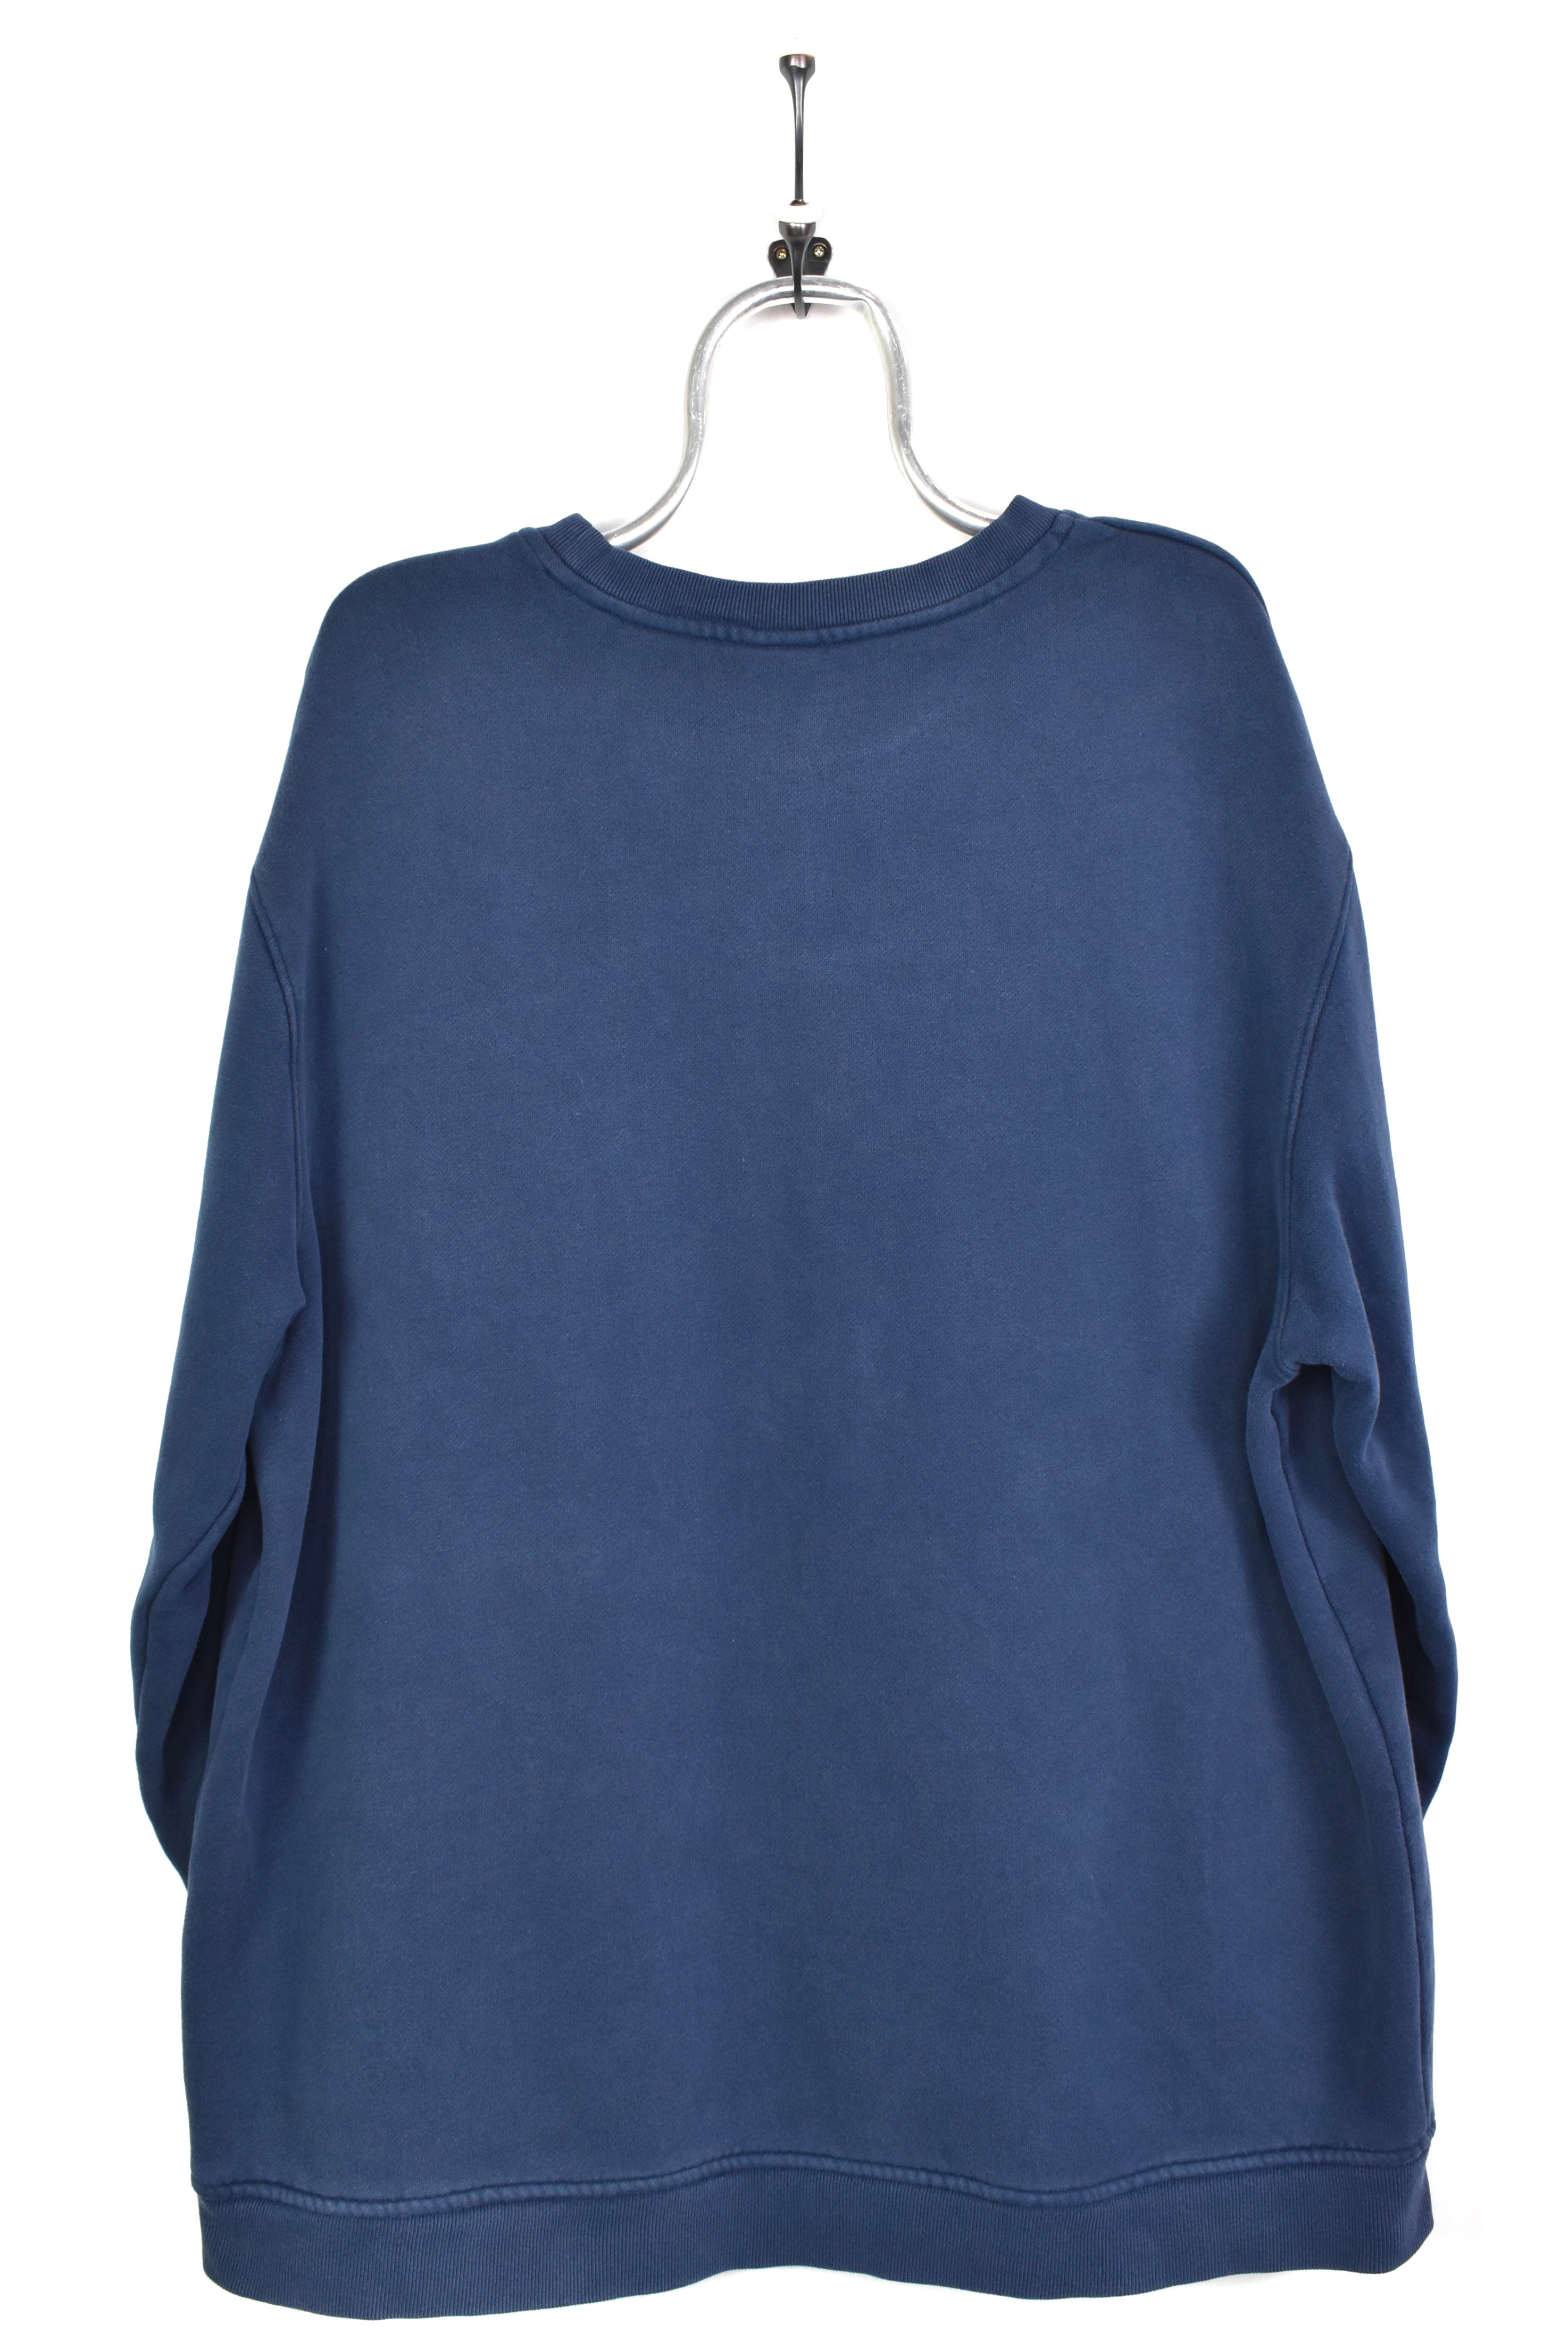 Vintage University of Michigan sweatshirt, Adidas embroidered crewneck - XL, navy blue COLLEGE